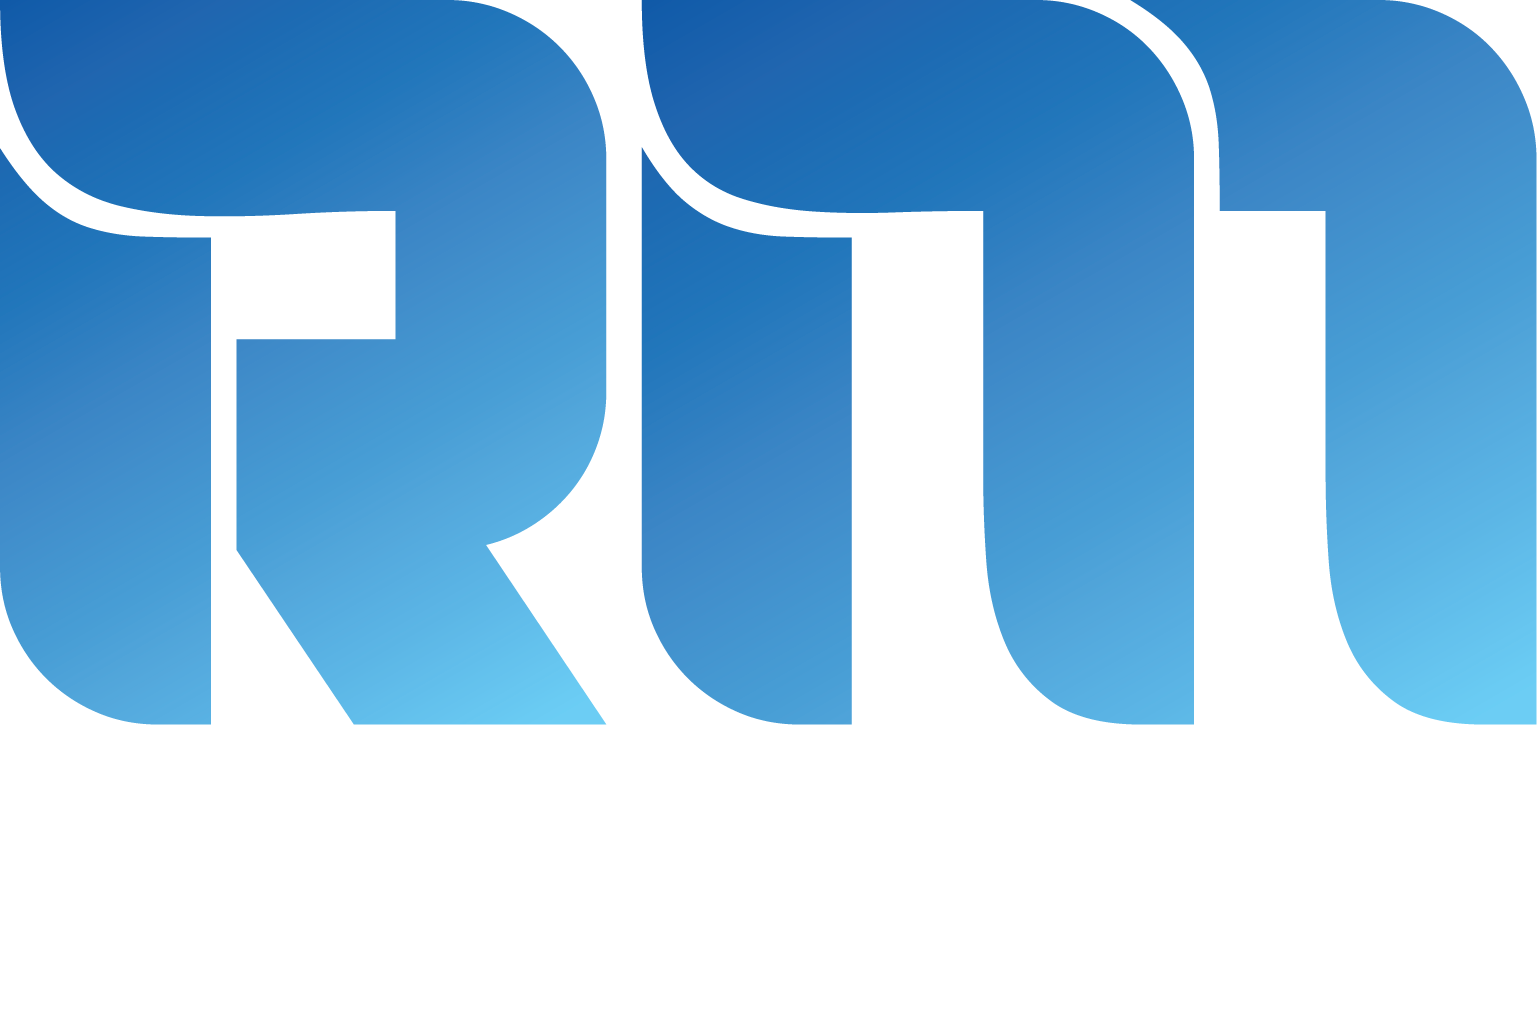 RM SmartInvesting